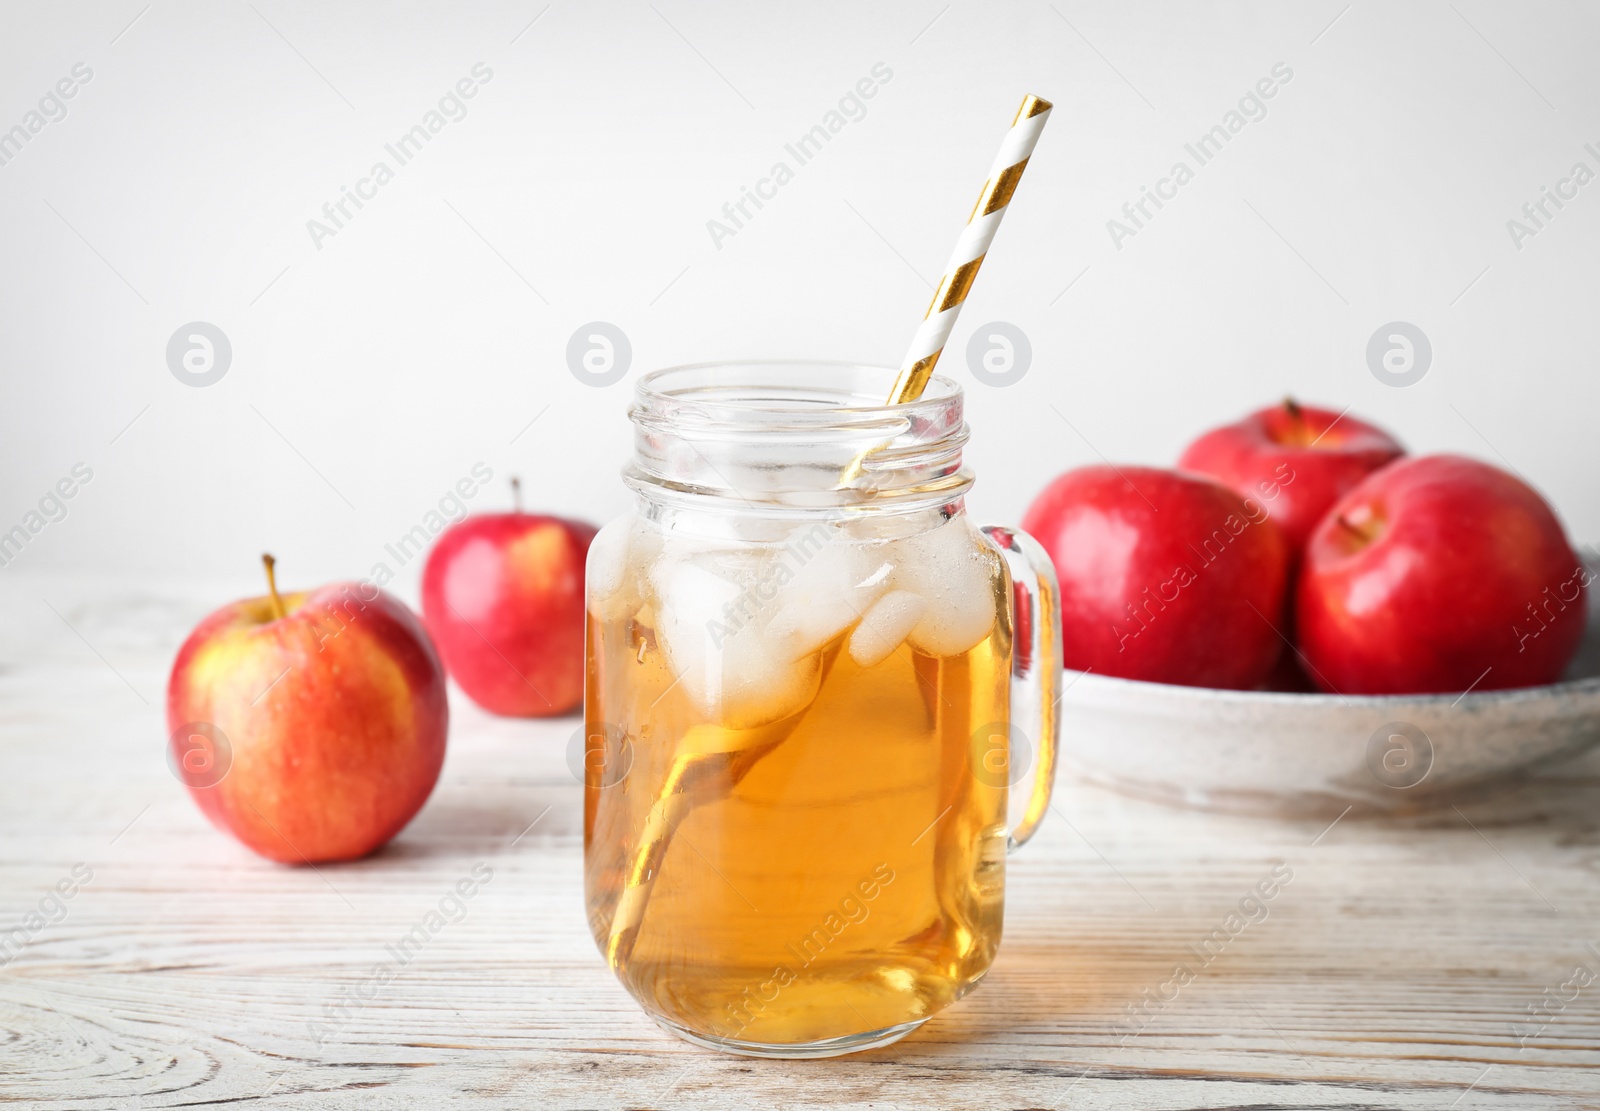 Photo of Mason jar with fresh apple juice on wooden table